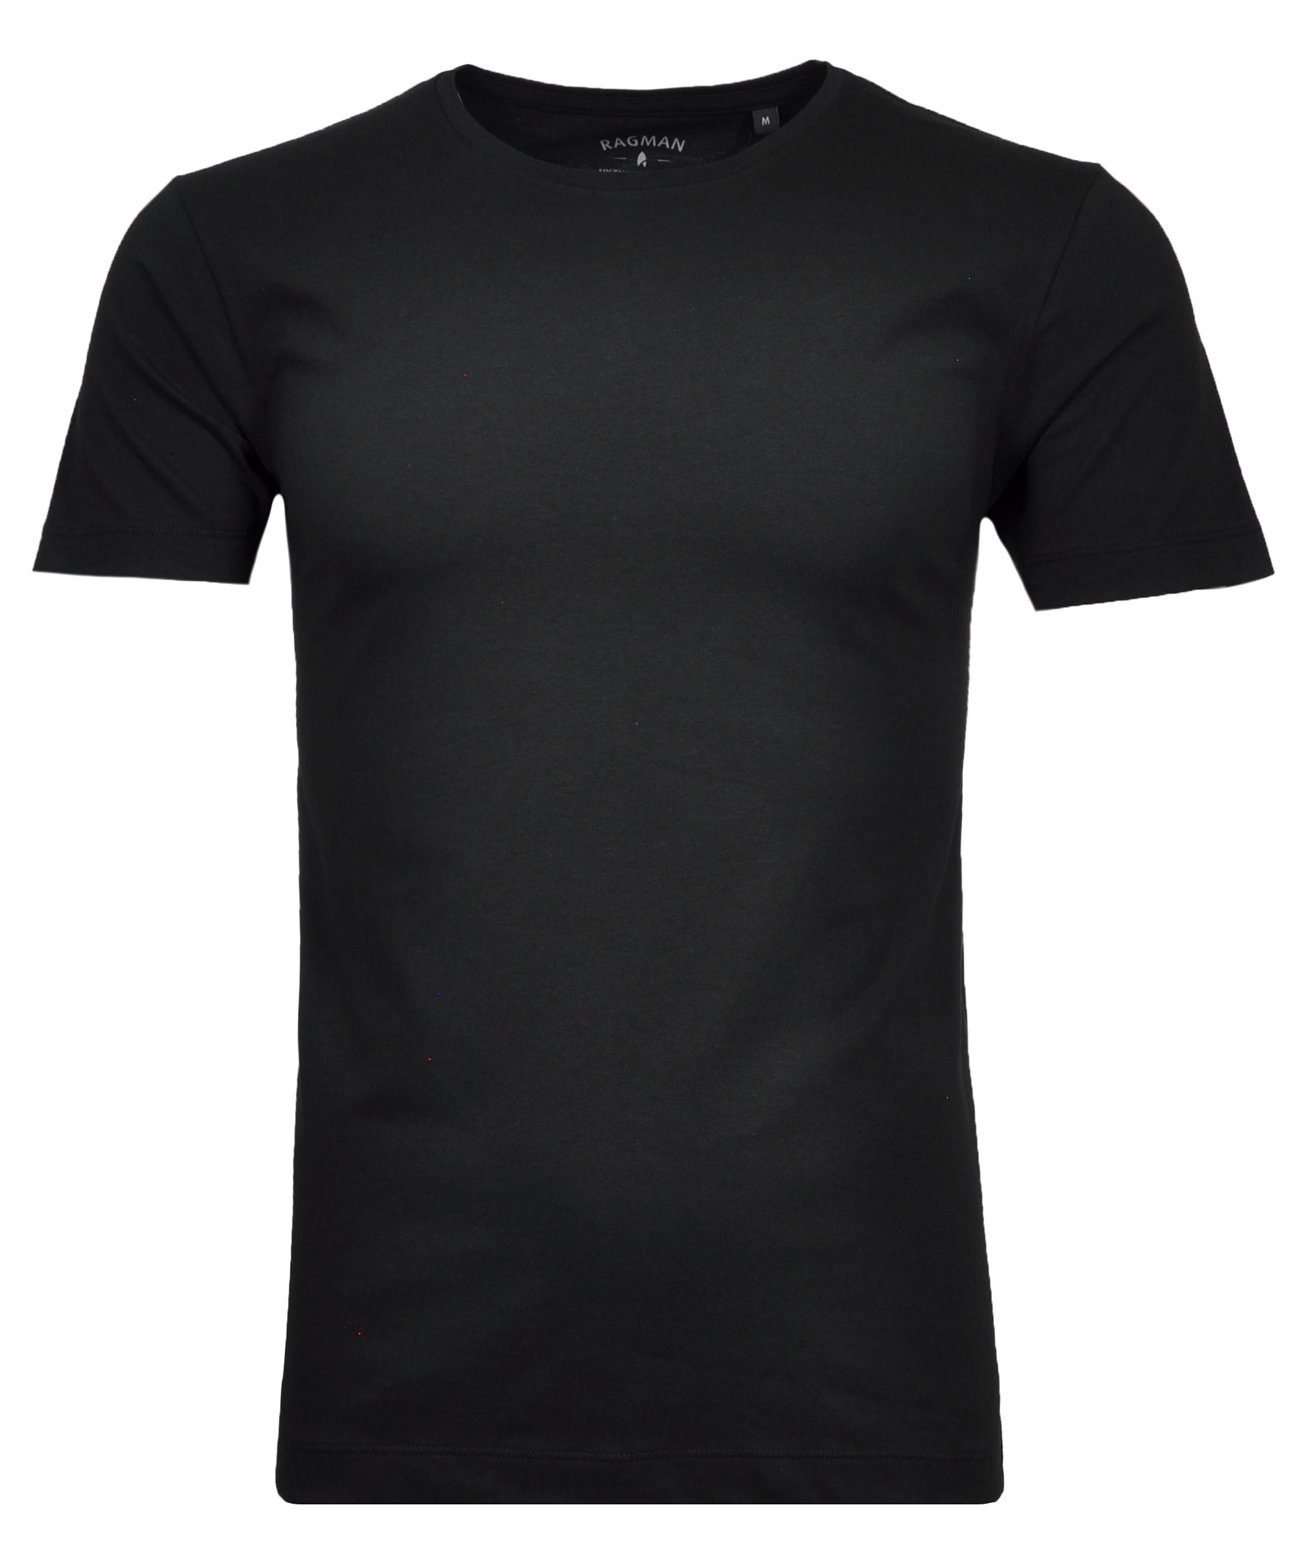 RAGMAN Longshirt Schwarz | T-Shirts